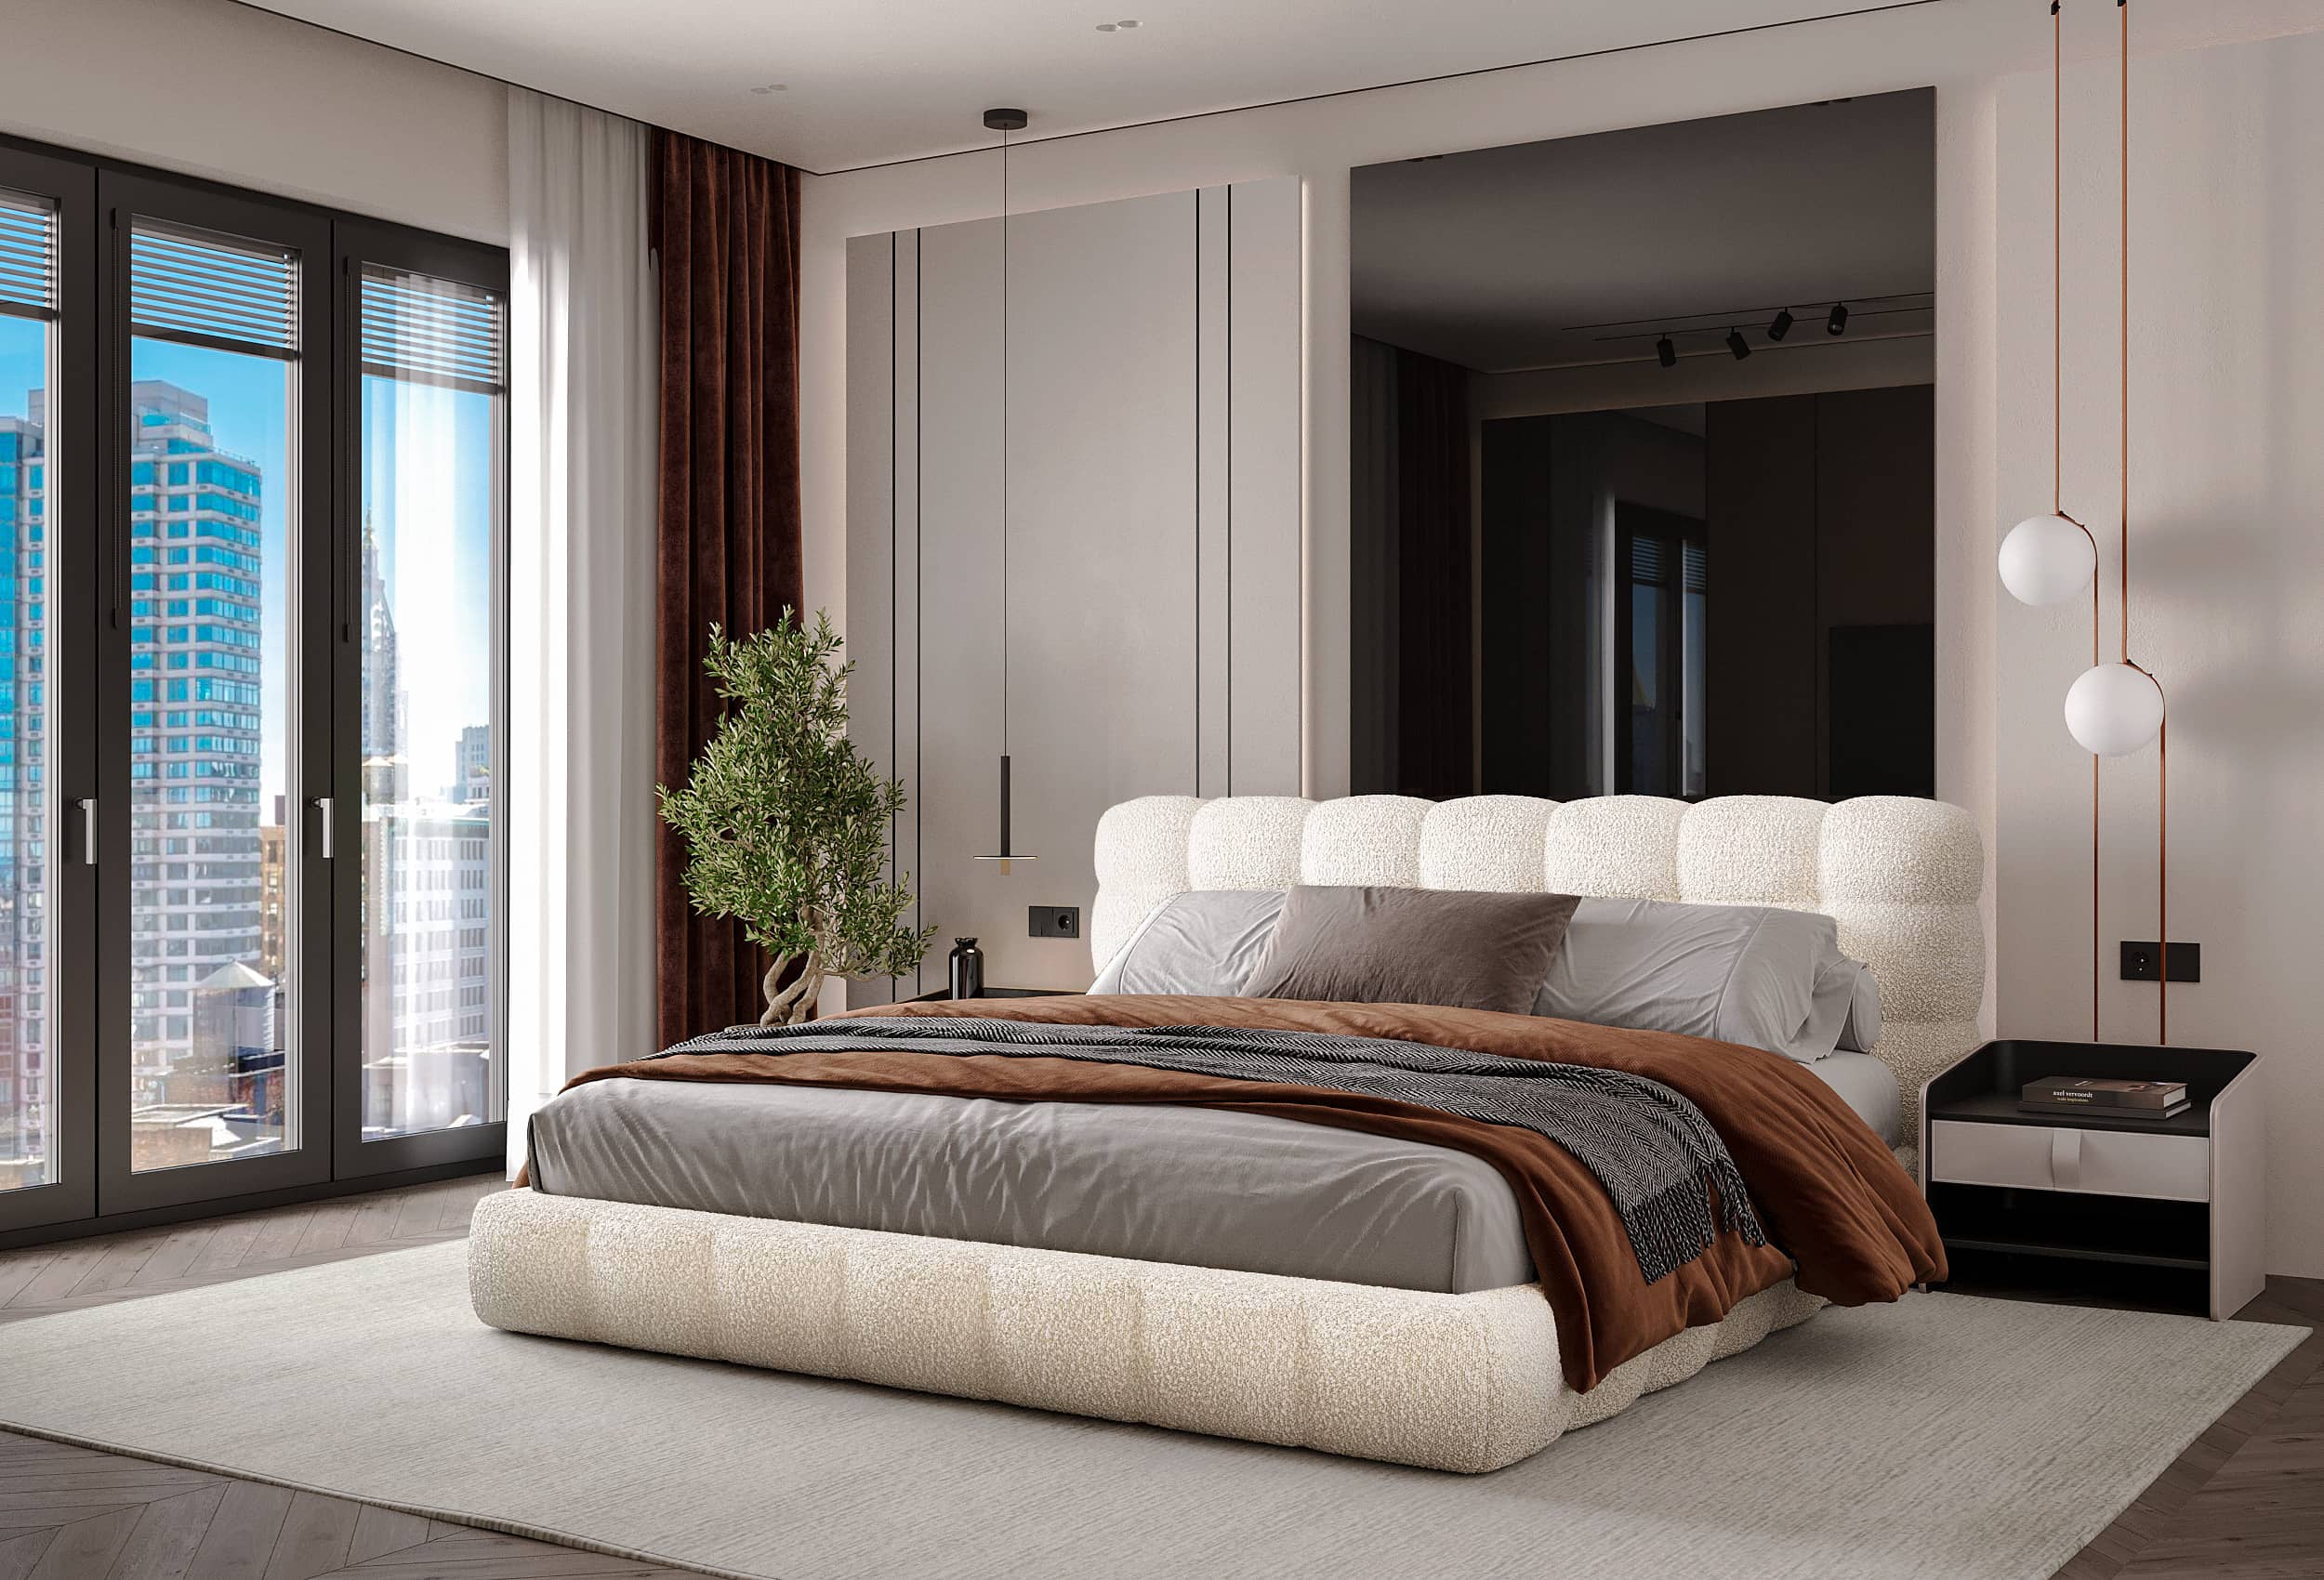 Nordic Line :: Tapicerowane łóżko Michelle białe boucle 160x200 cm